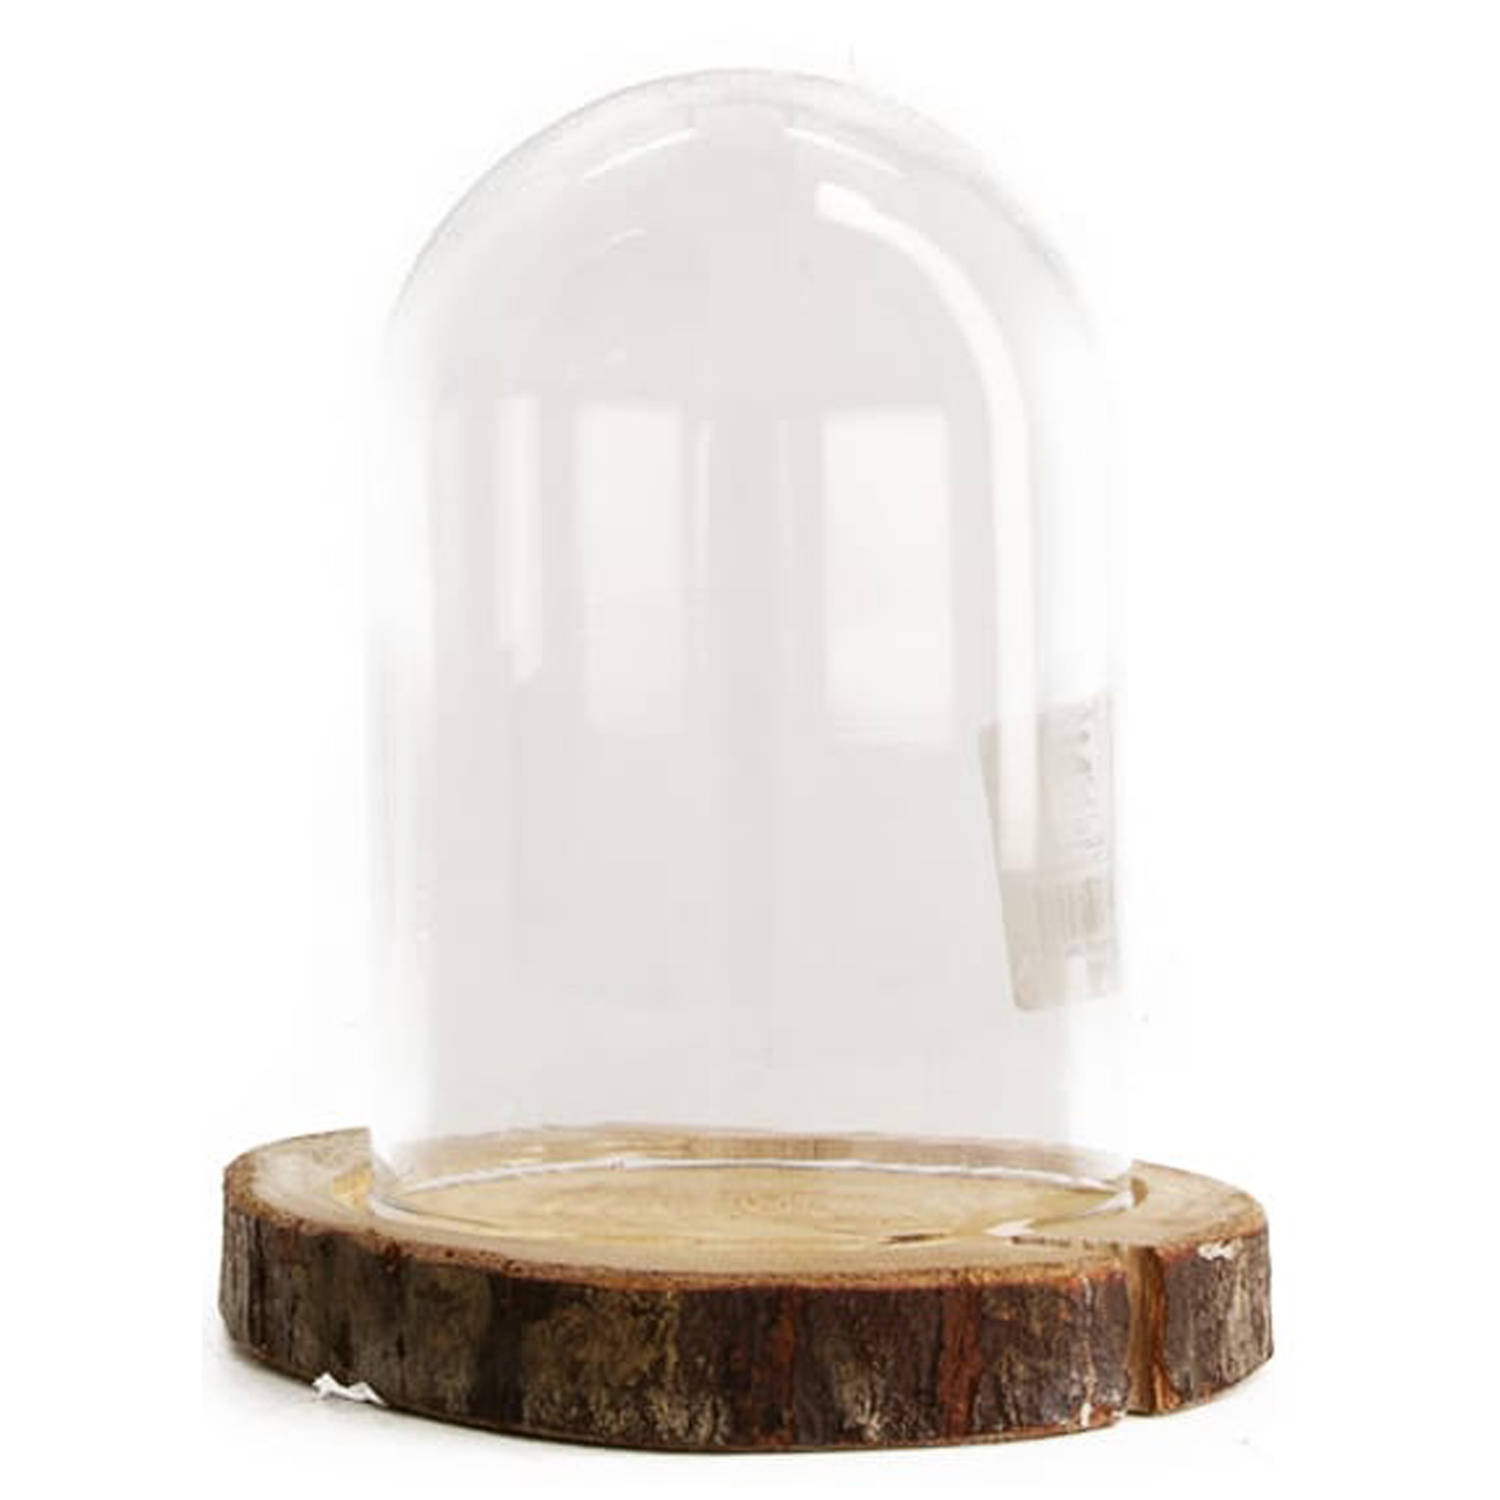 Dijk Natural Collections stolp - glas - houten bruin boomschijf plateau - D13 x H17,5 cm